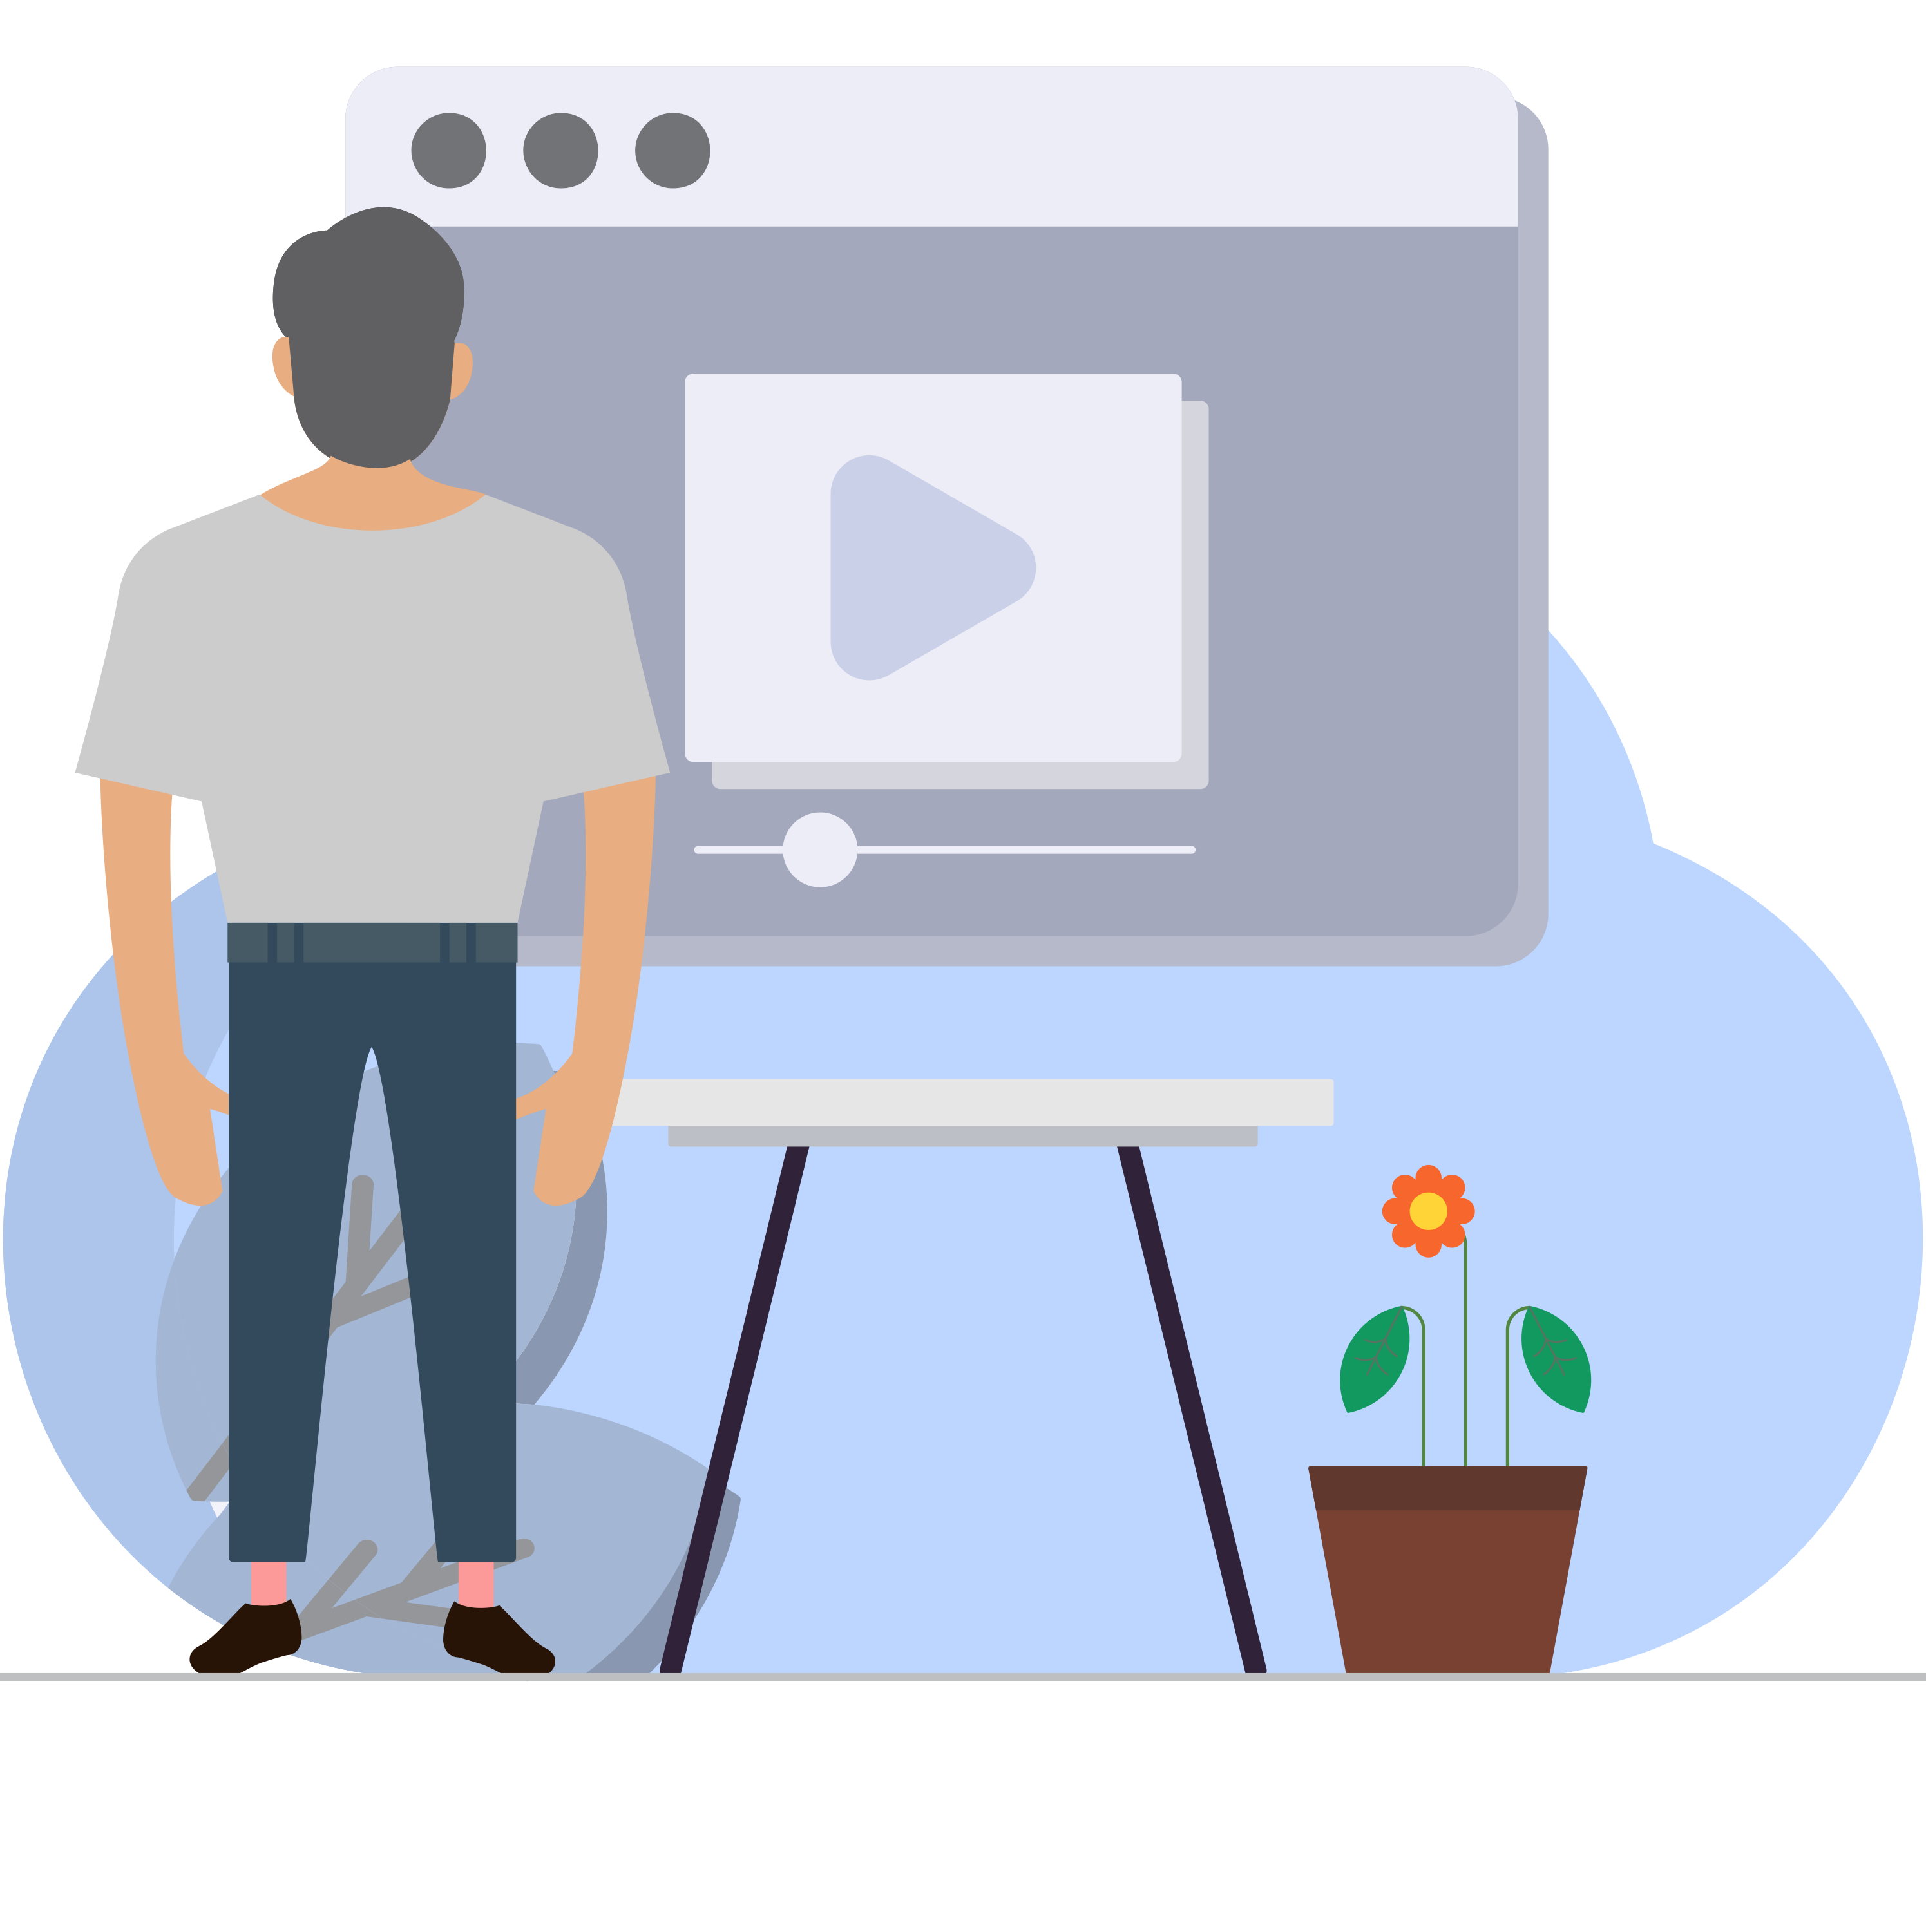 mobilevideo-onlinetutorial-streaming-videostreaming-illustration-player-illustration